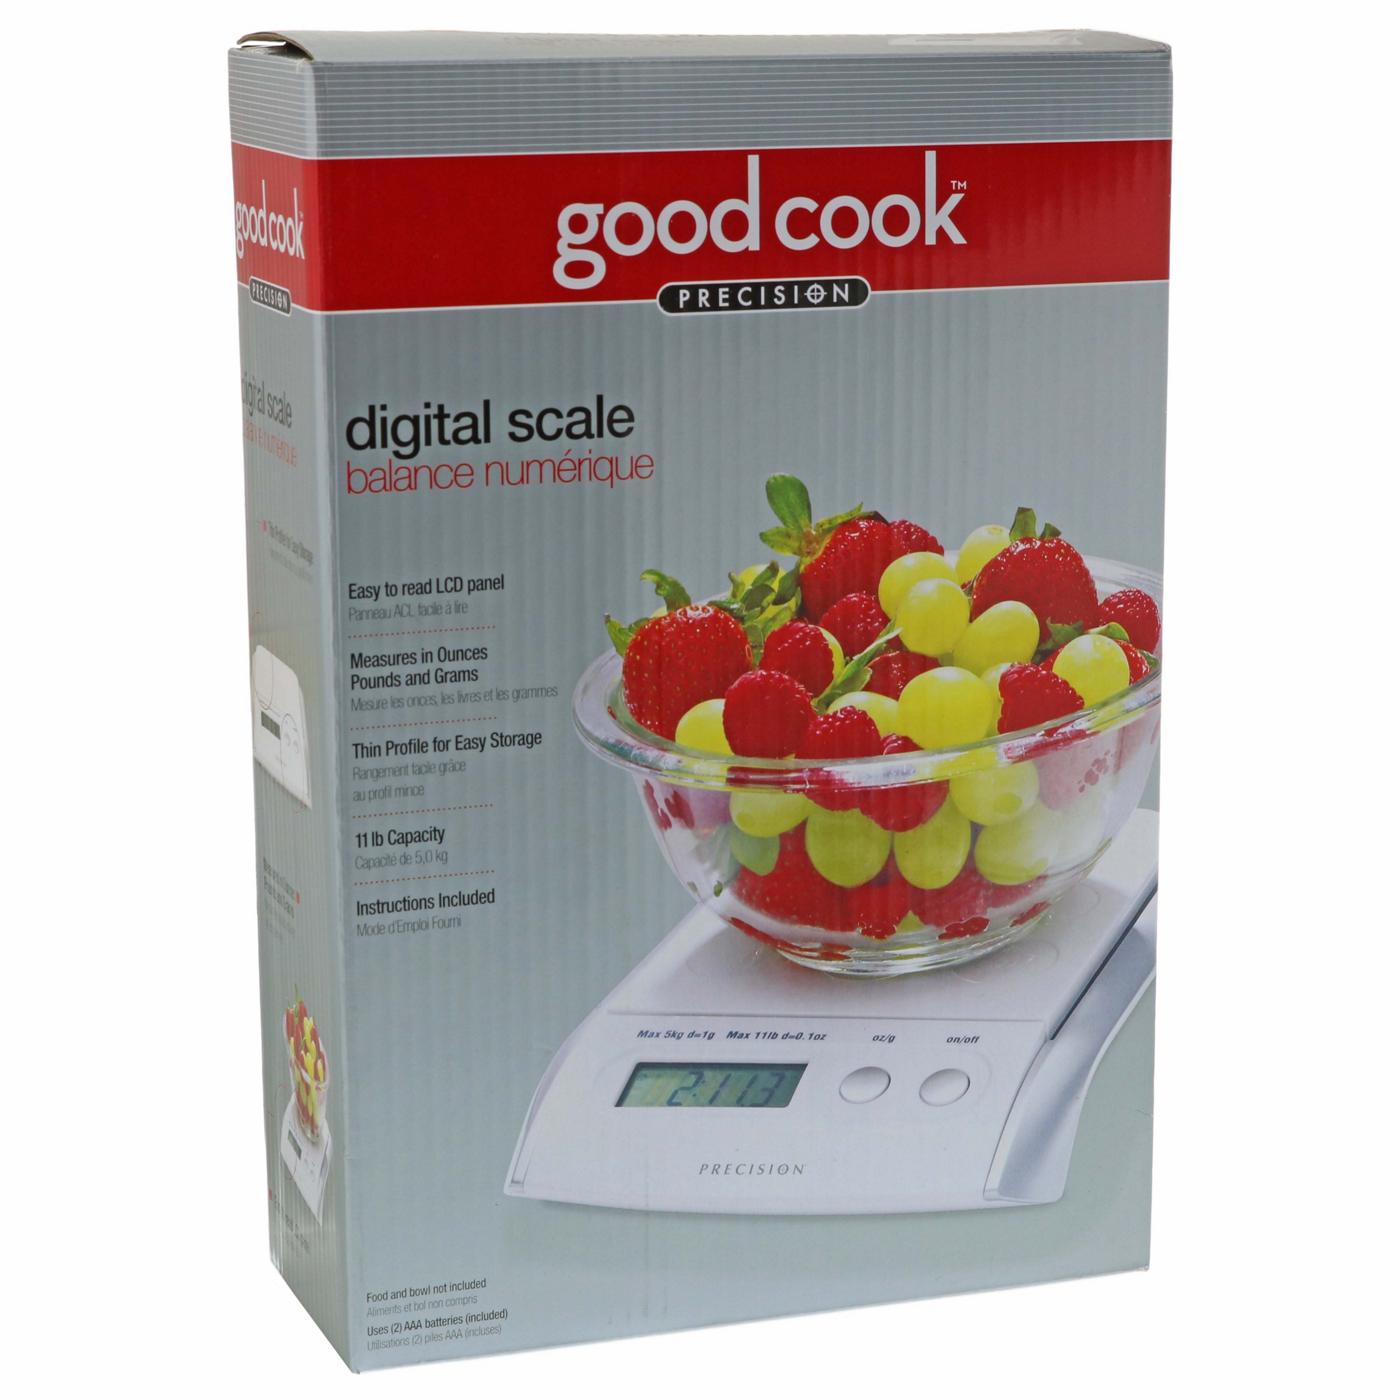 Good Cook Precision Digital Scale